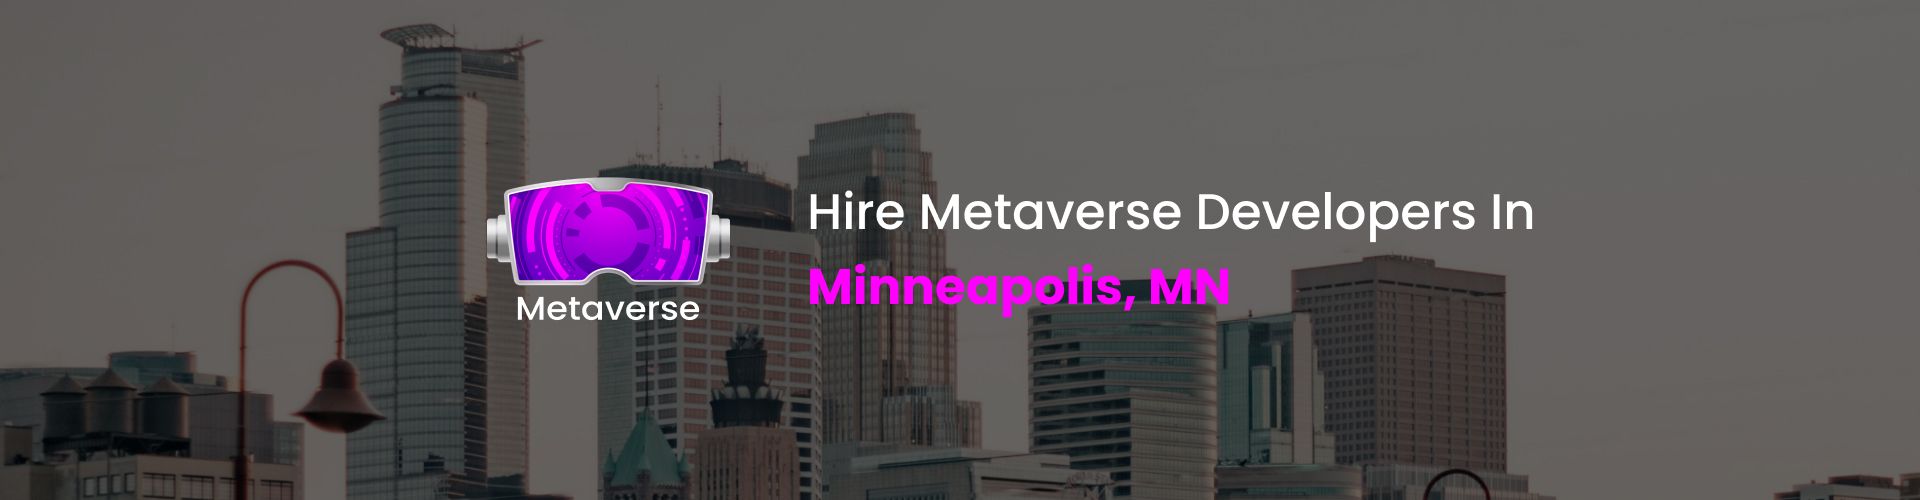 hire metaverse developers in minneapolis